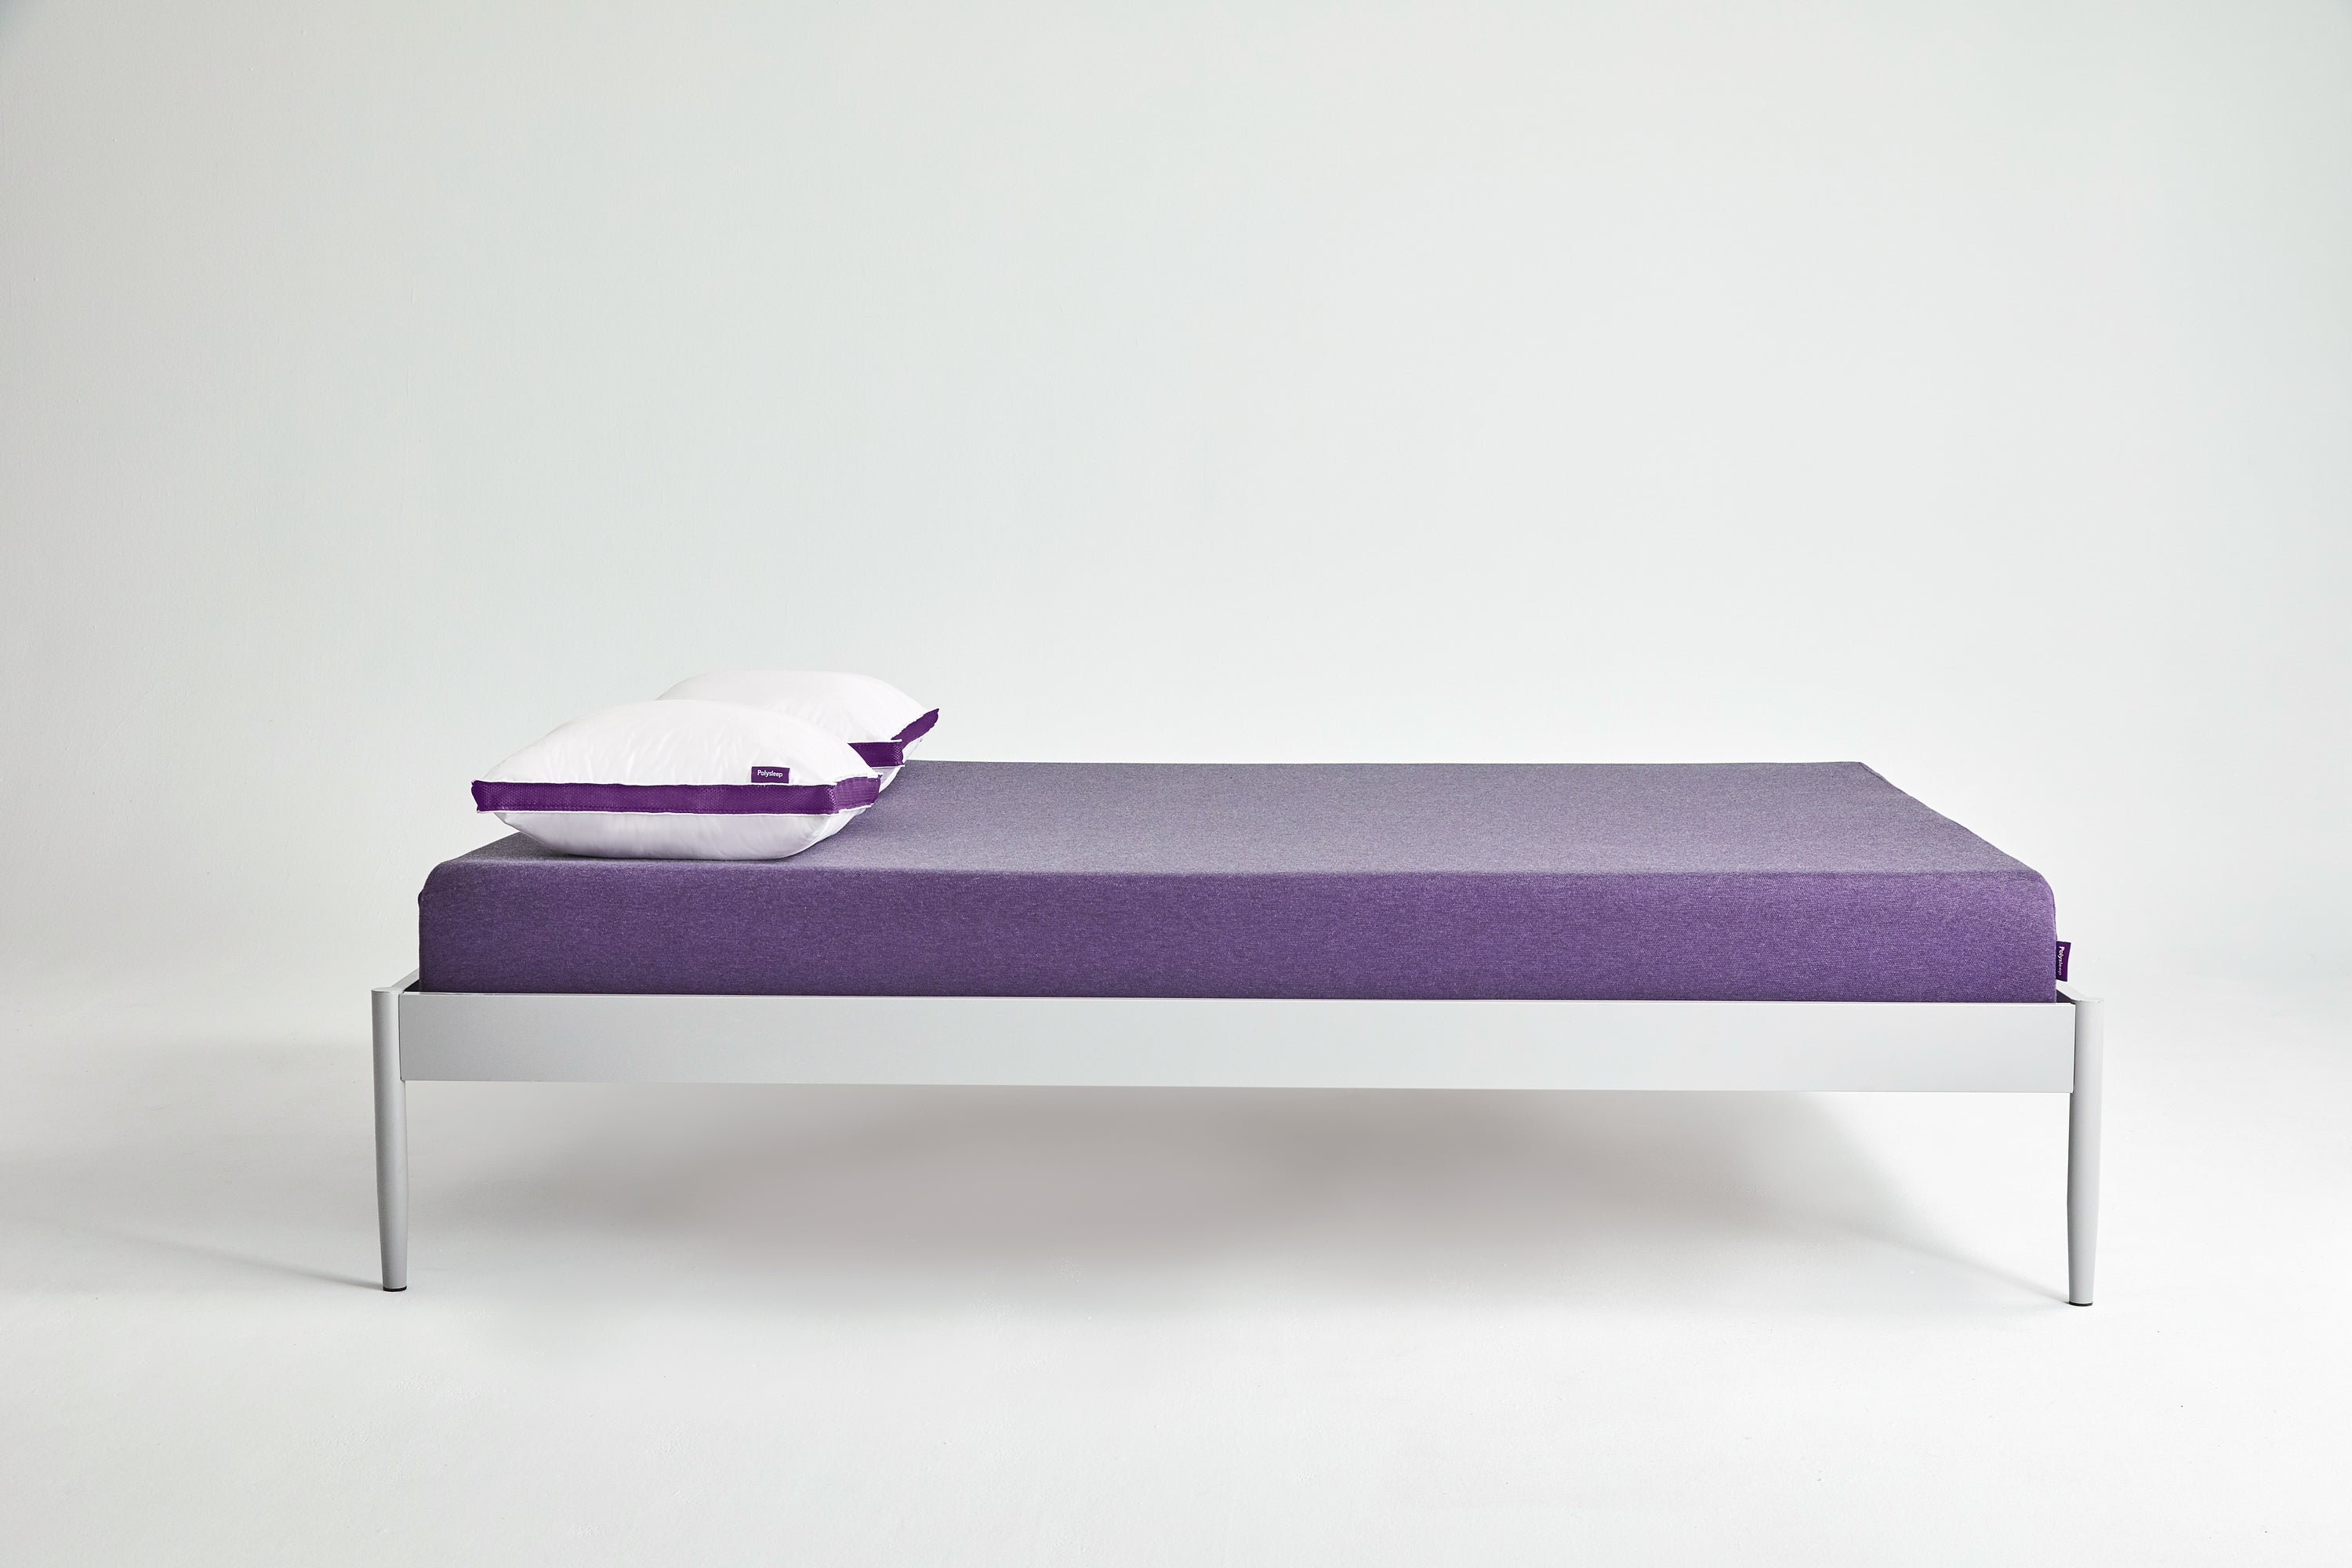 The Polysleep mattress and pillow